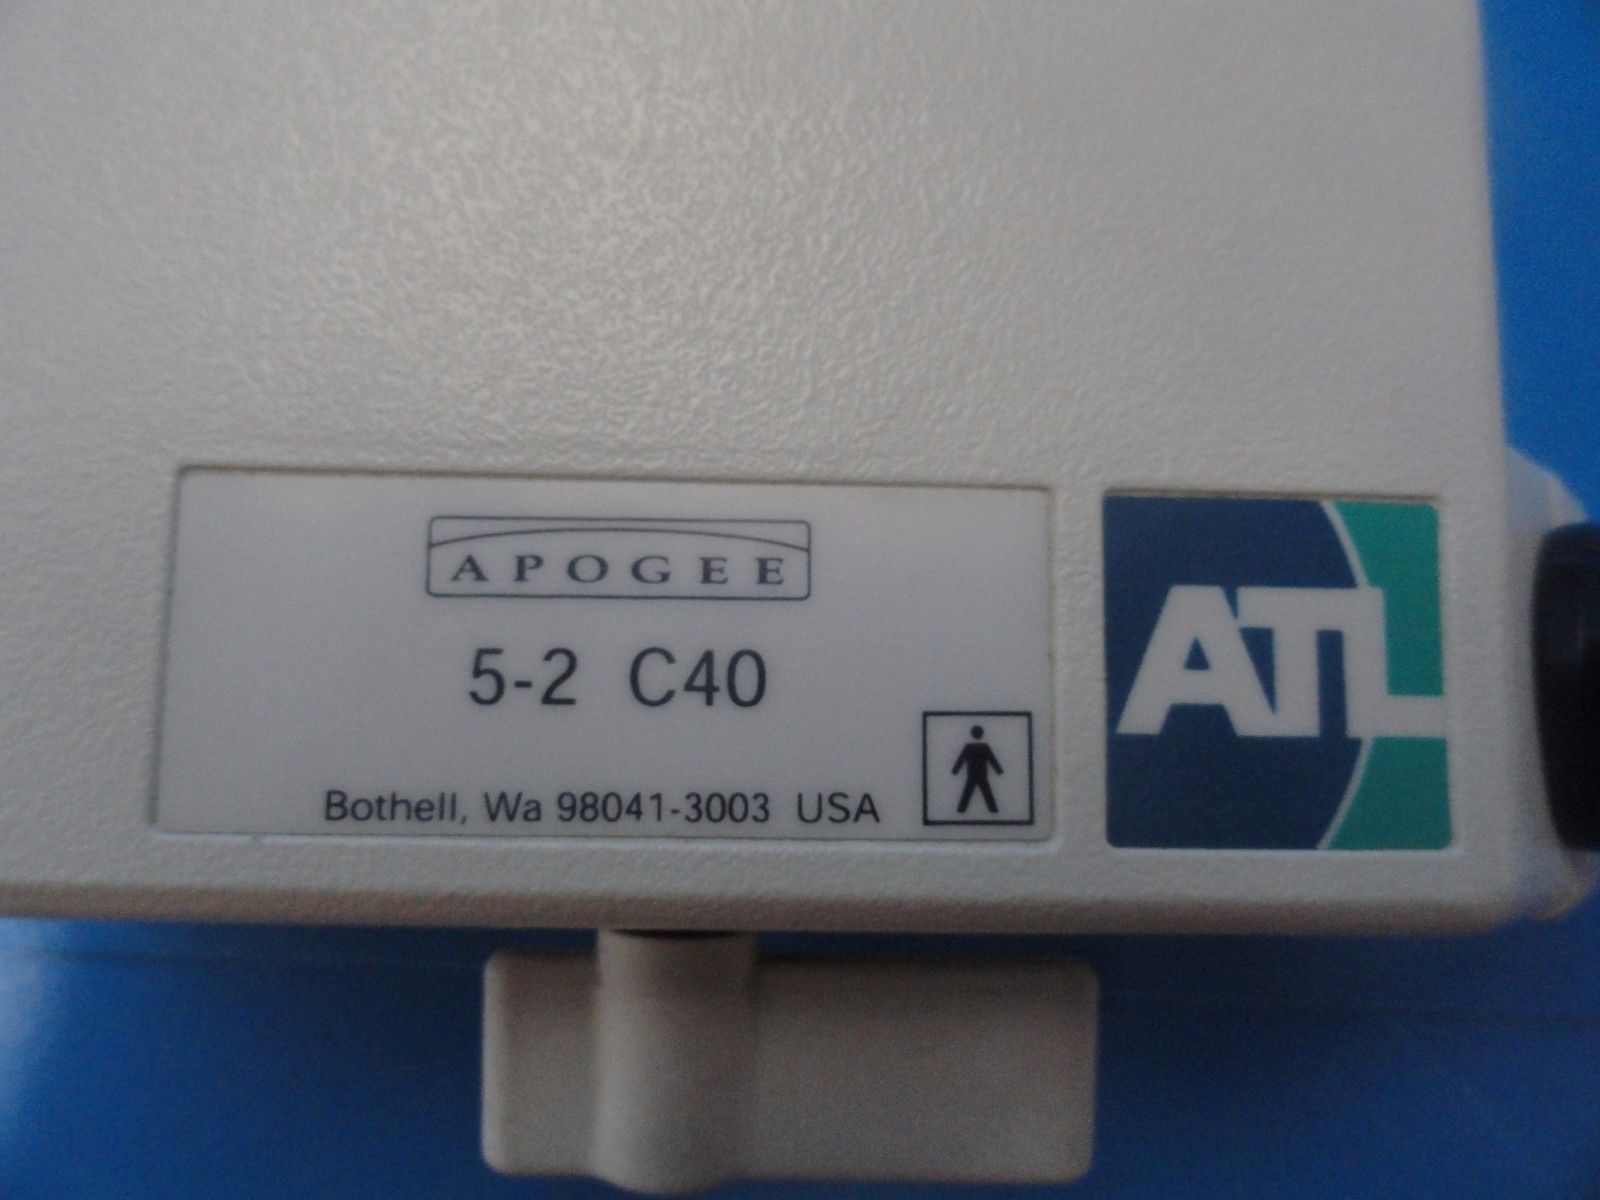 ATL APOGEE 5-2 C40 Convex Array 40mm Probe for ATL Apogee CX800/CX800Plus (7154) DIAGNOSTIC ULTRASOUND MACHINES FOR SALE